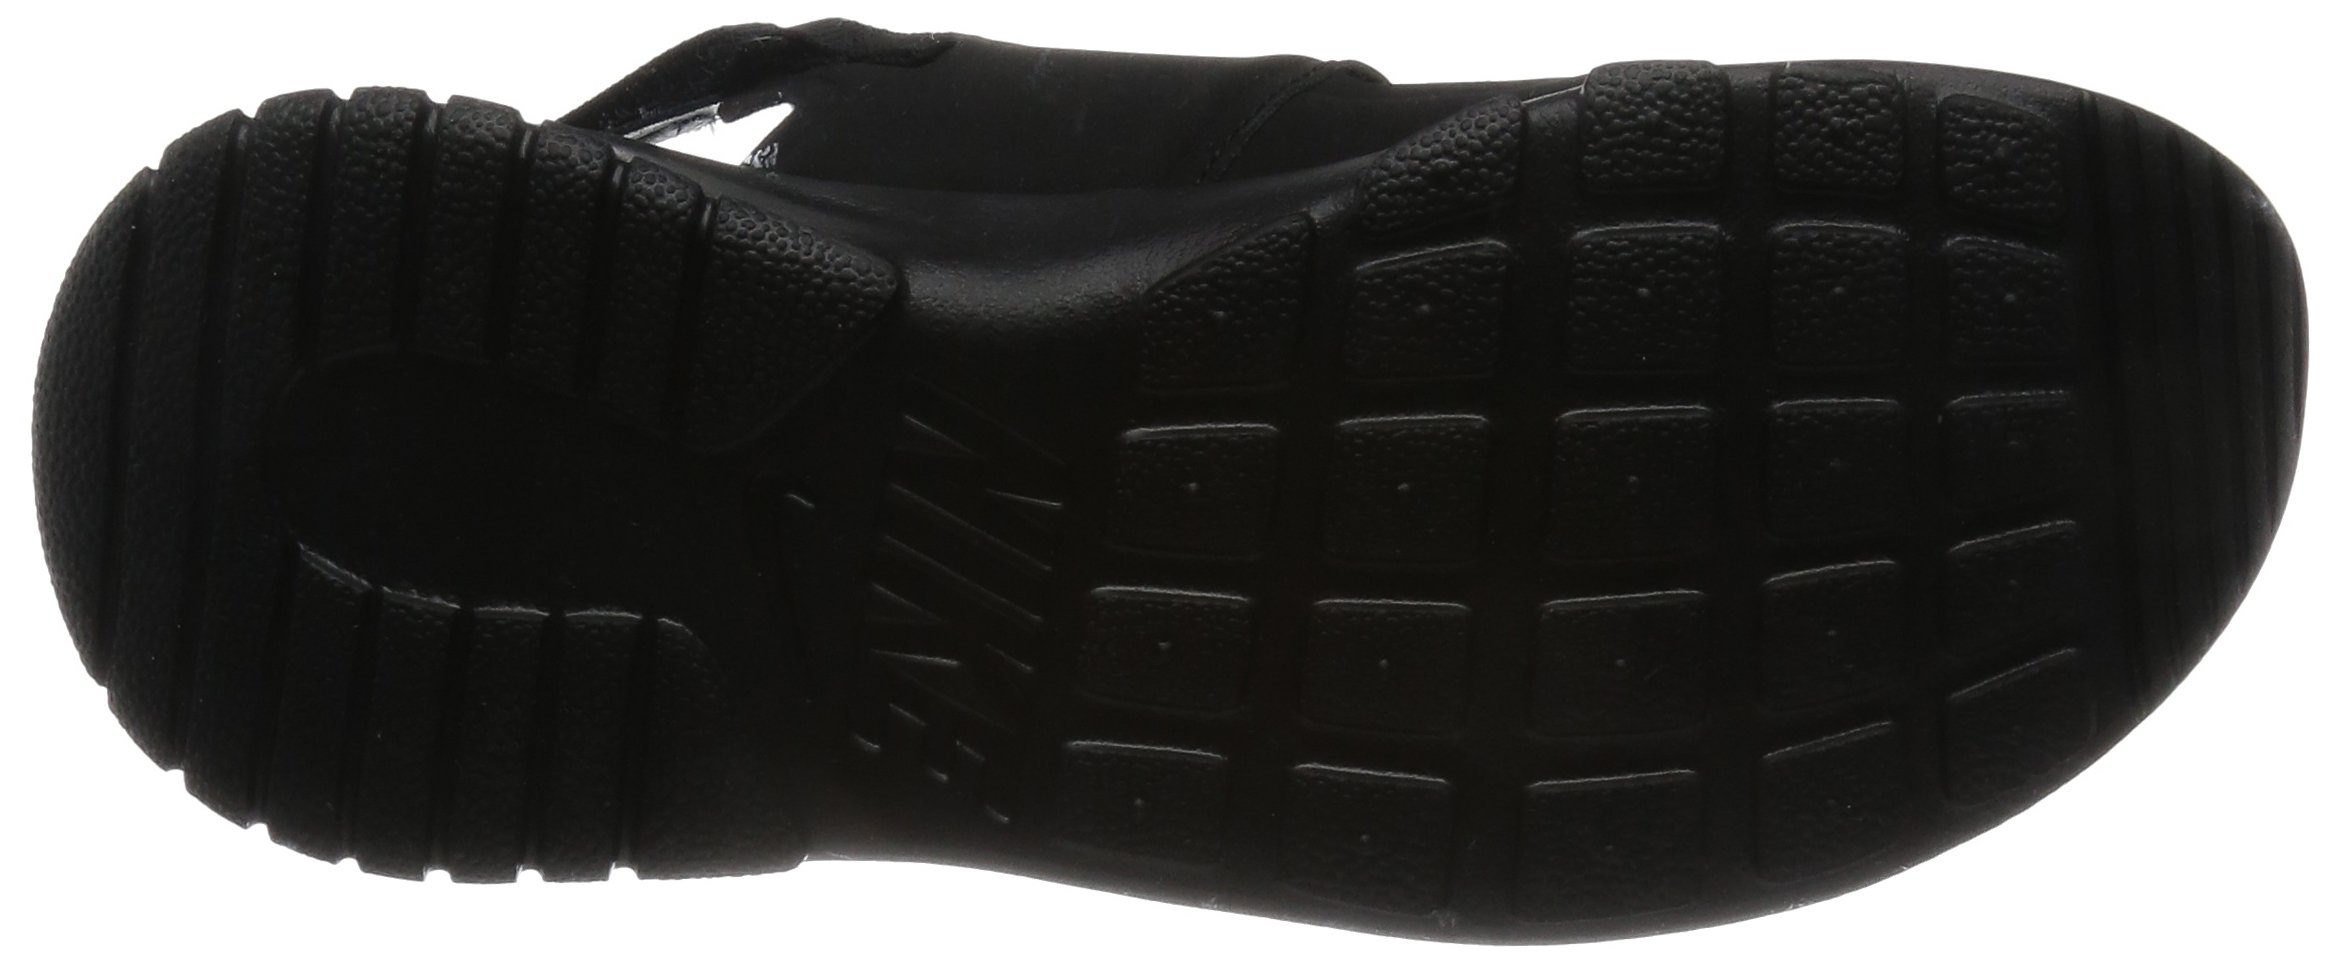 Nike Tanjun Womens Sandal Black/White/Black 882694-001 (7 B(M) US)